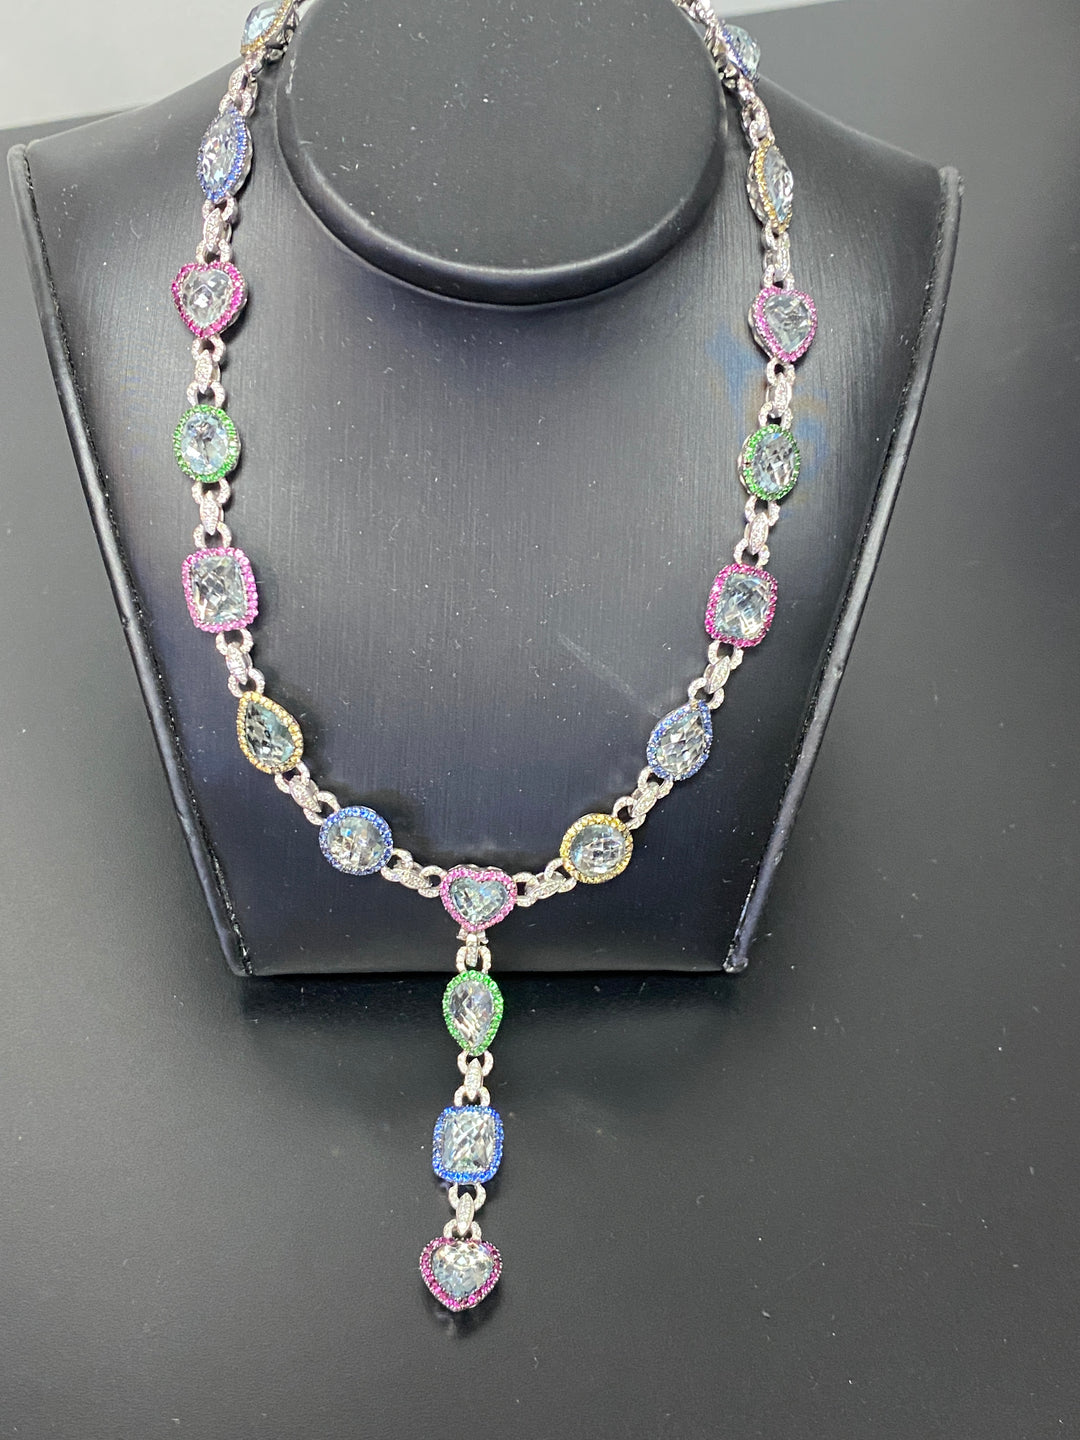 Lariat 46.50 ctw Aquamarine Sapphire and Diamond Necklace 18K White Gold